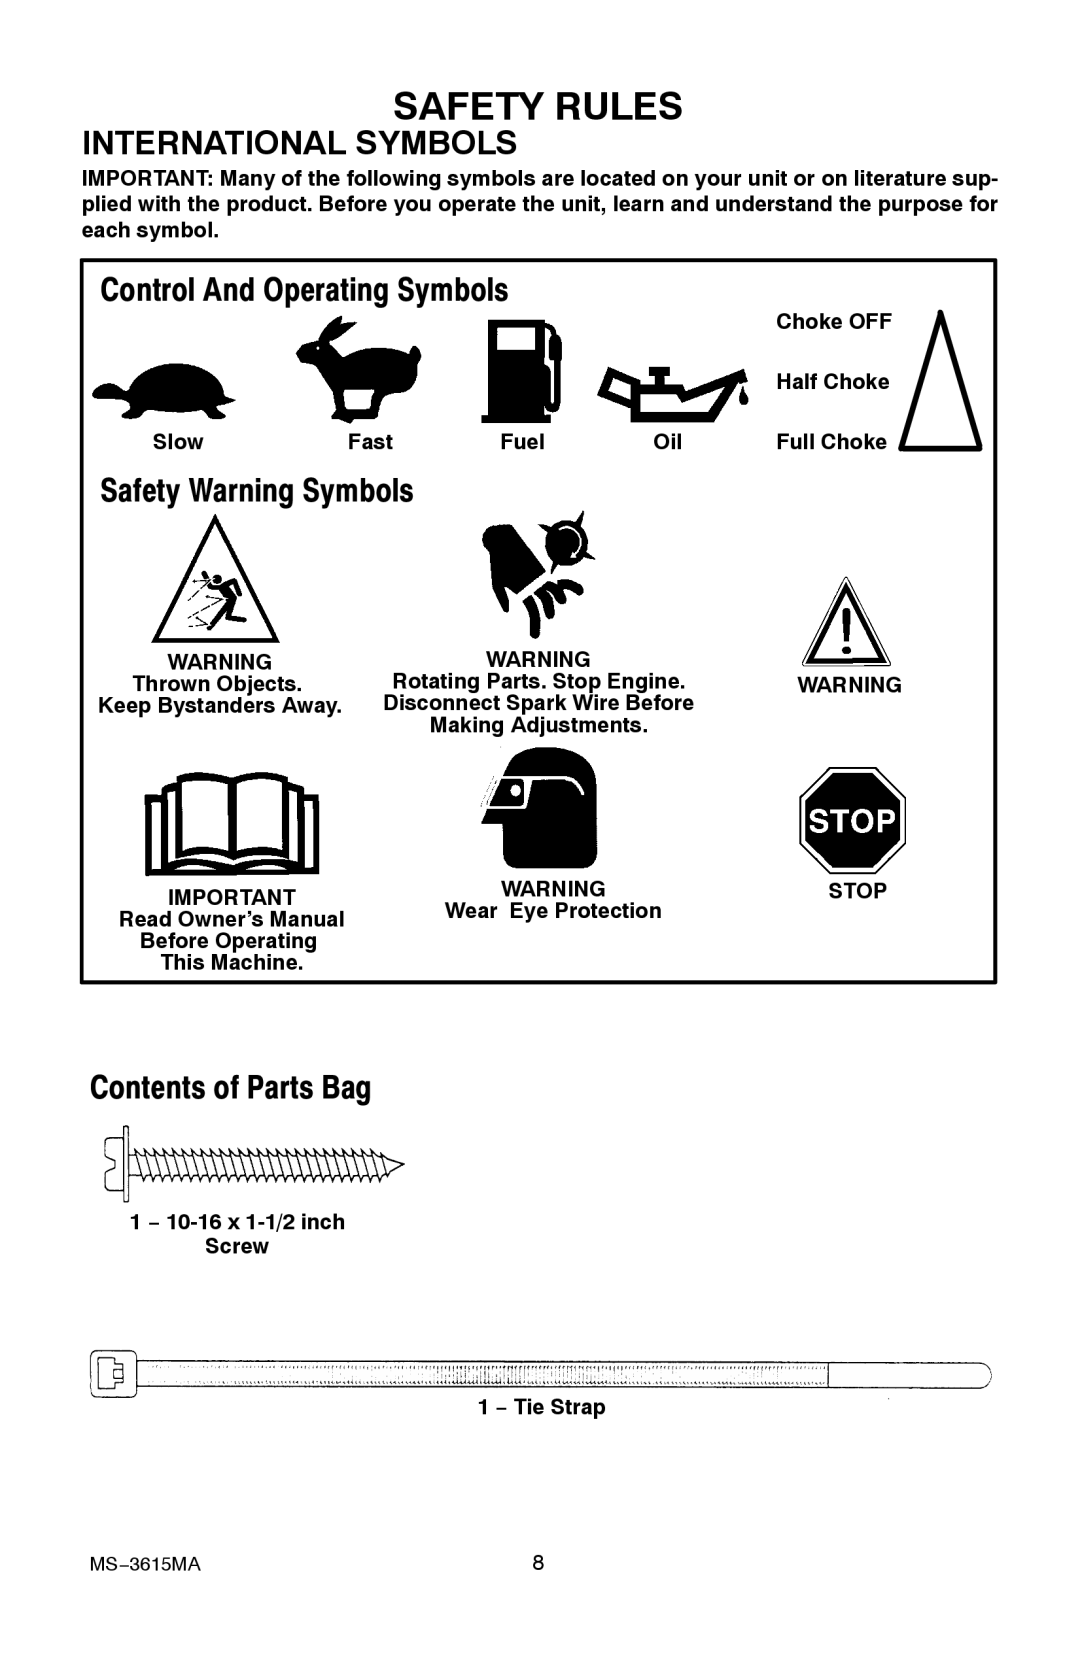 Husqvarna CT20 manual International Symbols, Safety Rules, Control And Operating Symbols, Safety Warning Symbols 